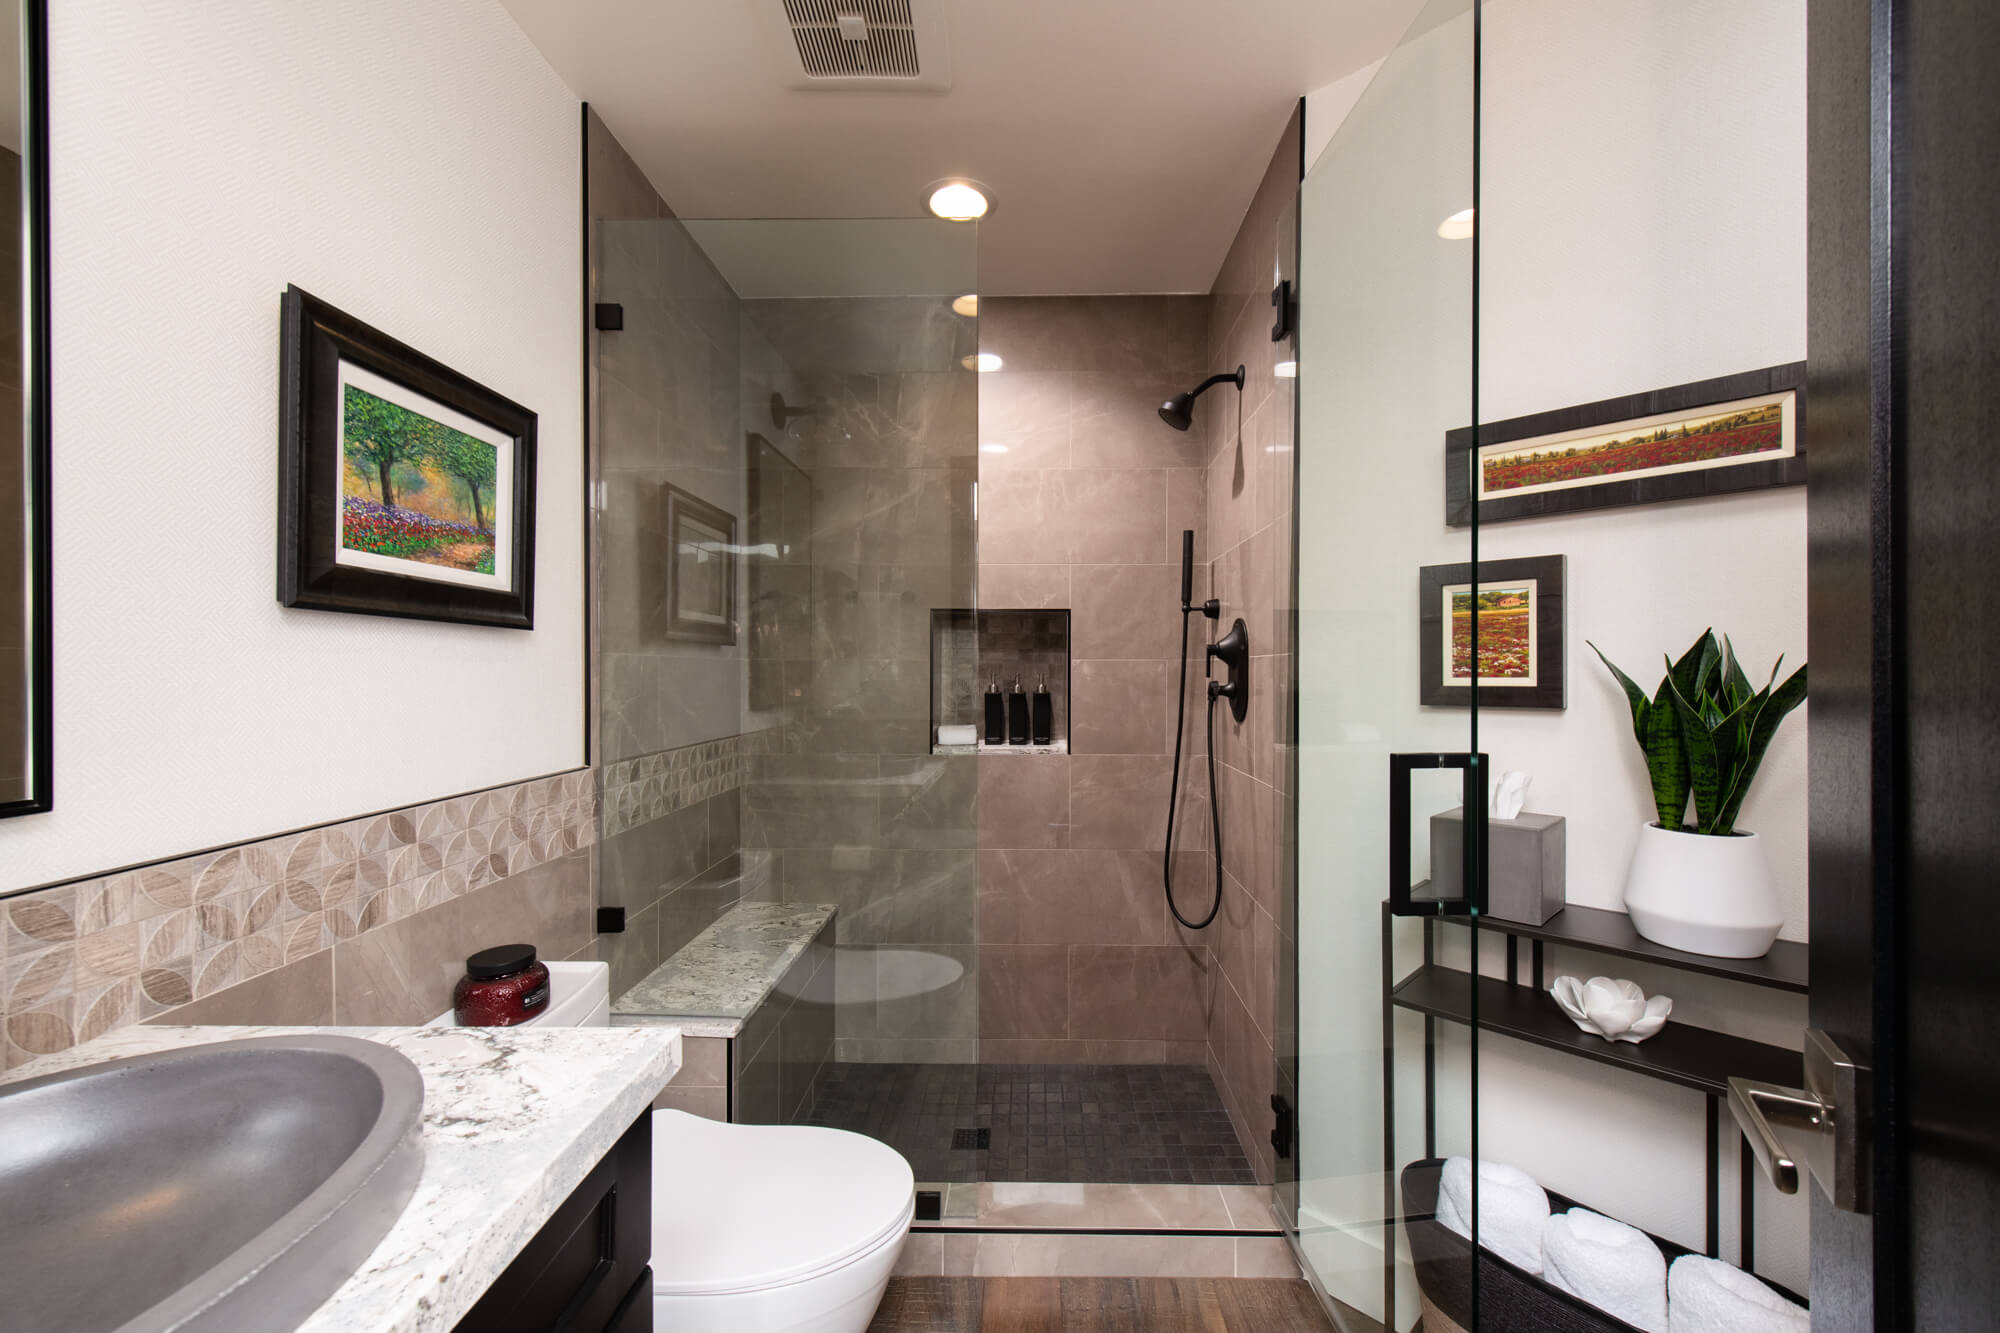 Anaheim Hills hall bathroom renovation - small bathroom remodeling